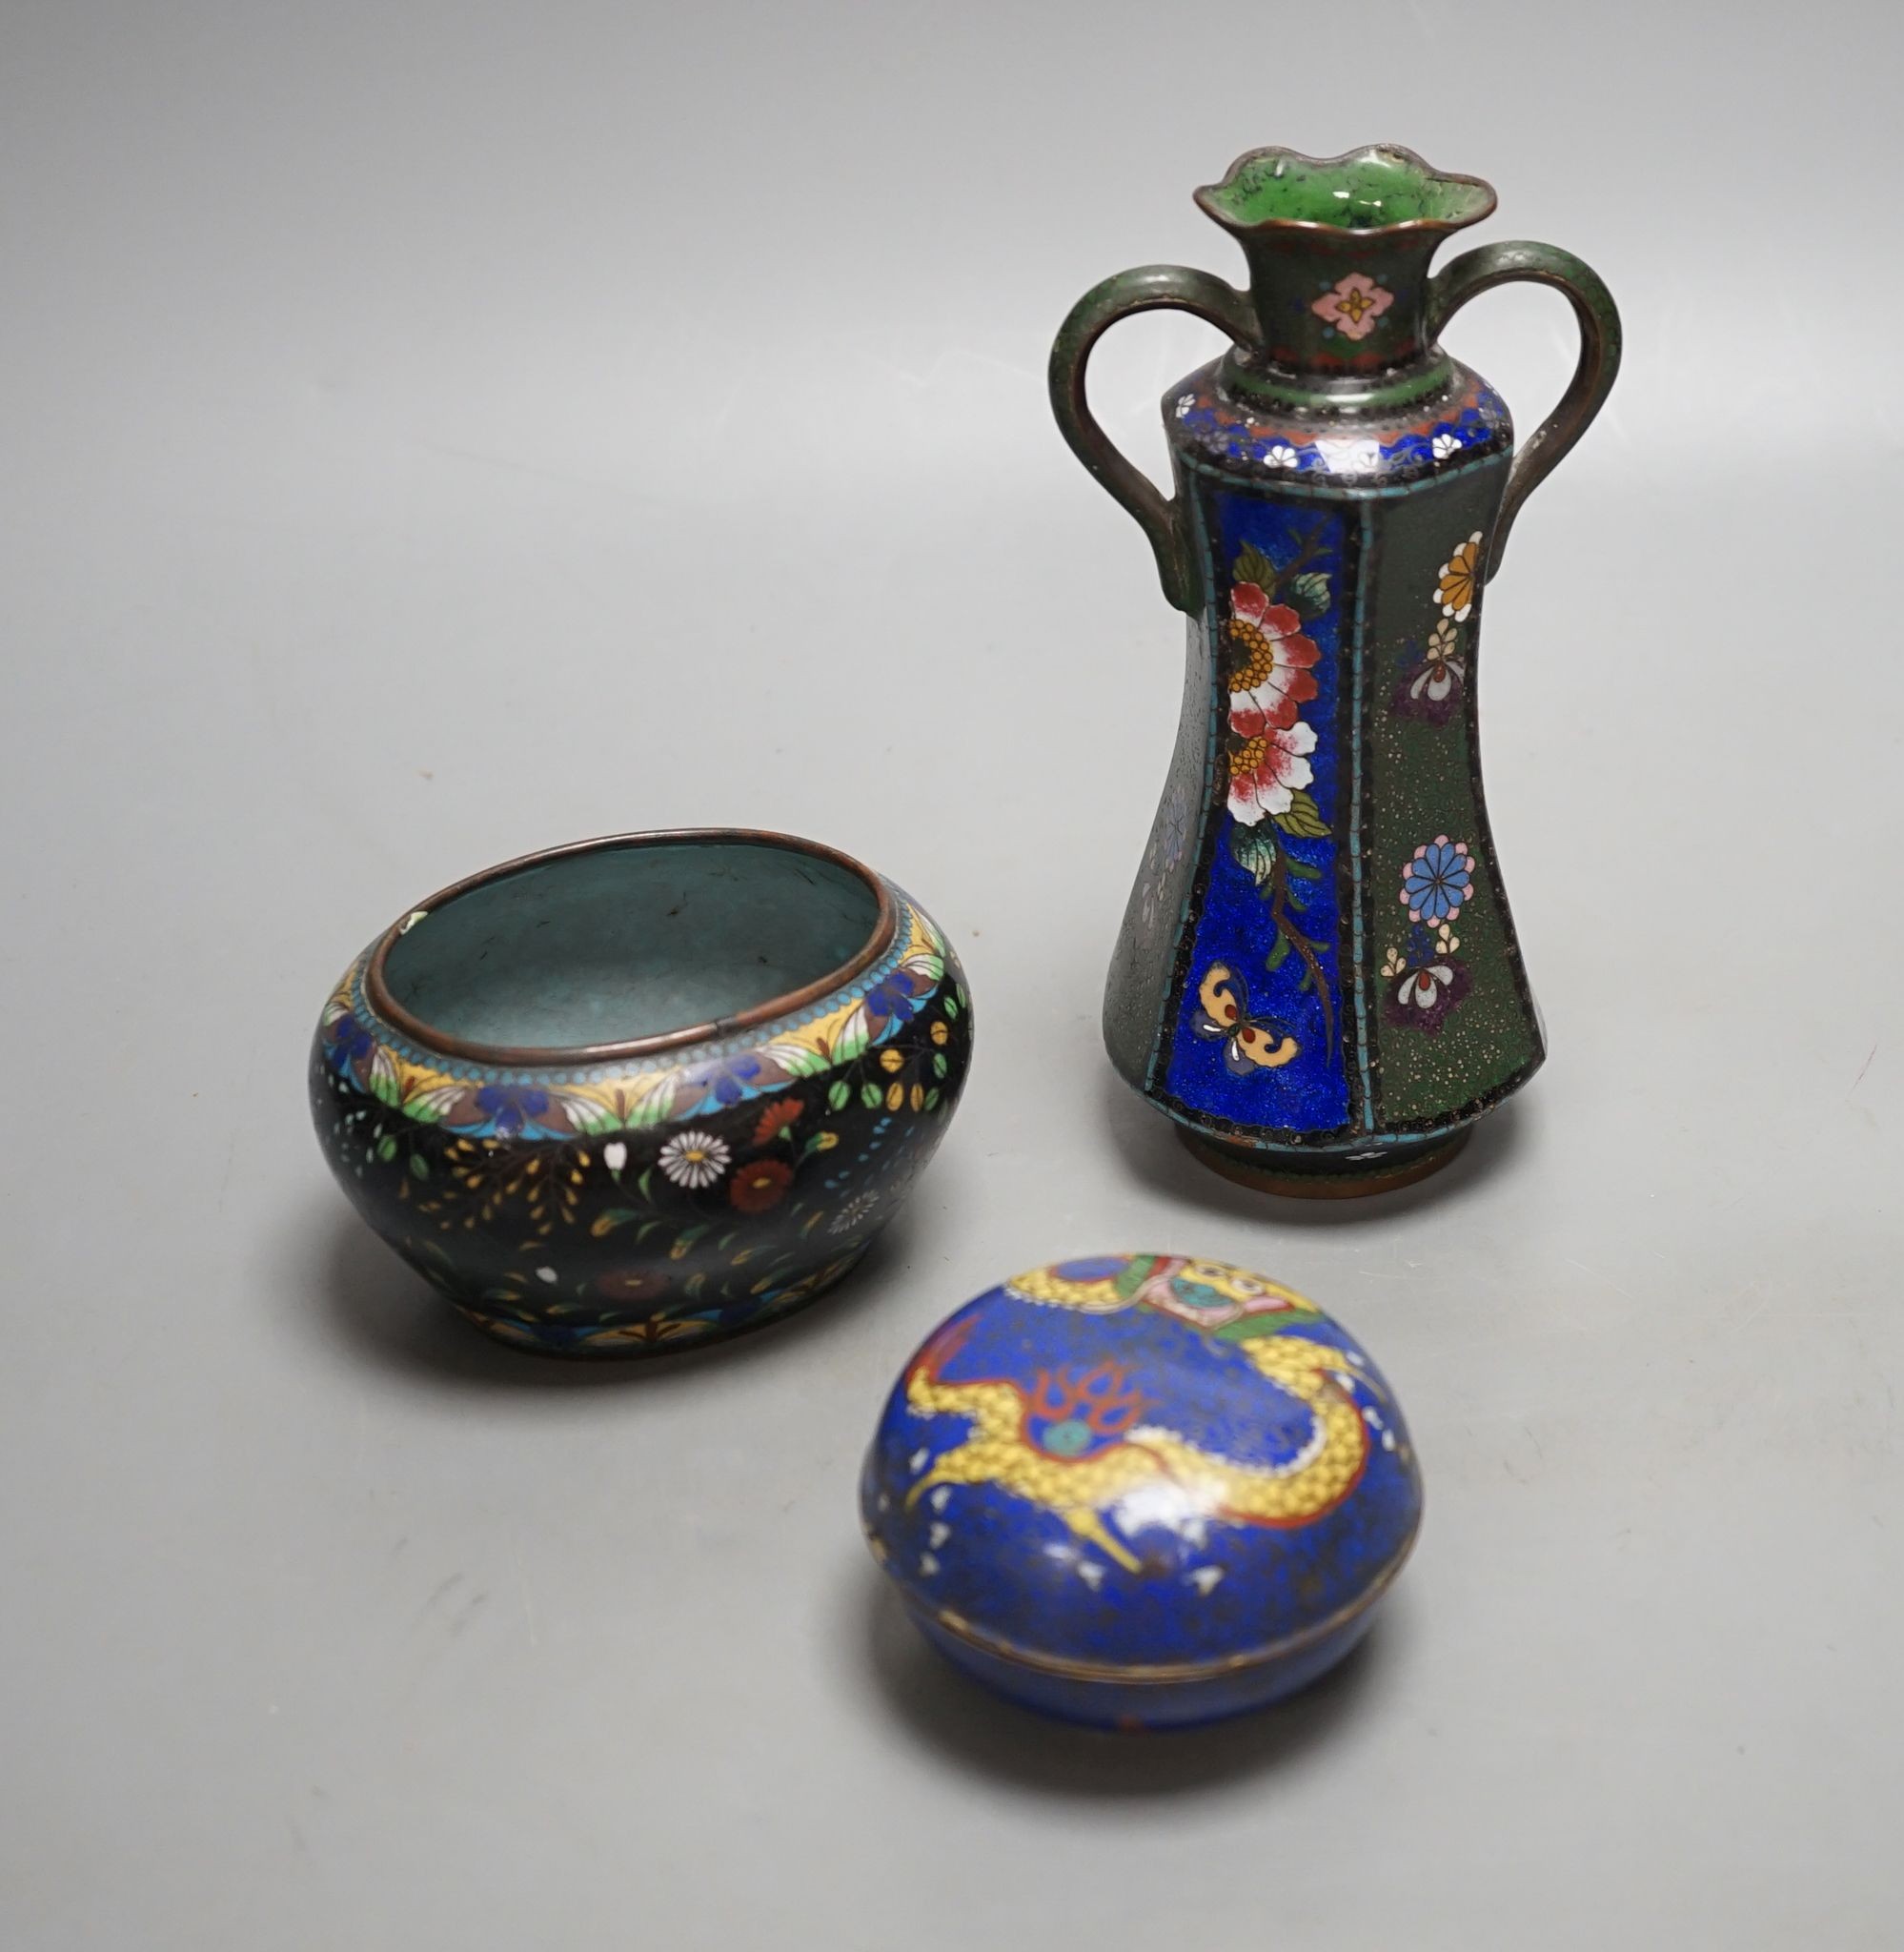 A Chinese cloisonné enamel dragon box and cover and two Japanese cloisonné enamel vessels, tallest 18cm